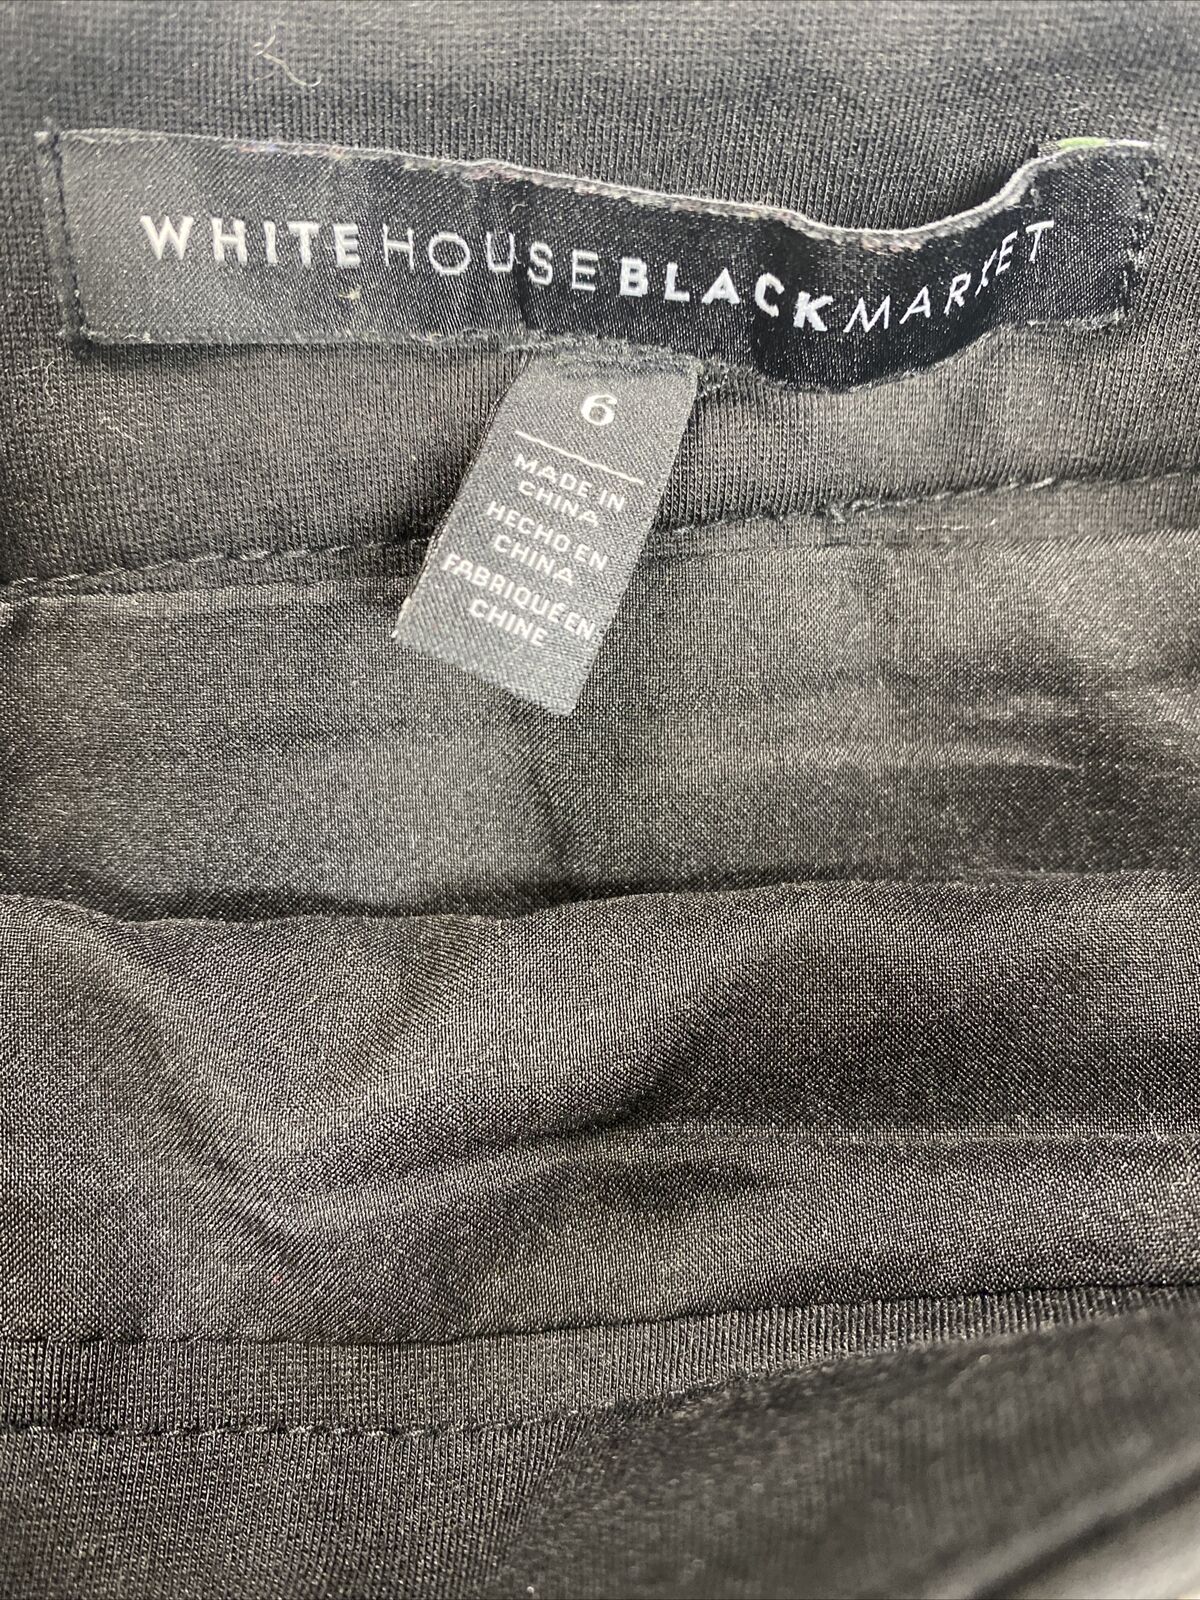 White House Black Market Women's Black Tweed Panel Pencil Skirt Sz 6